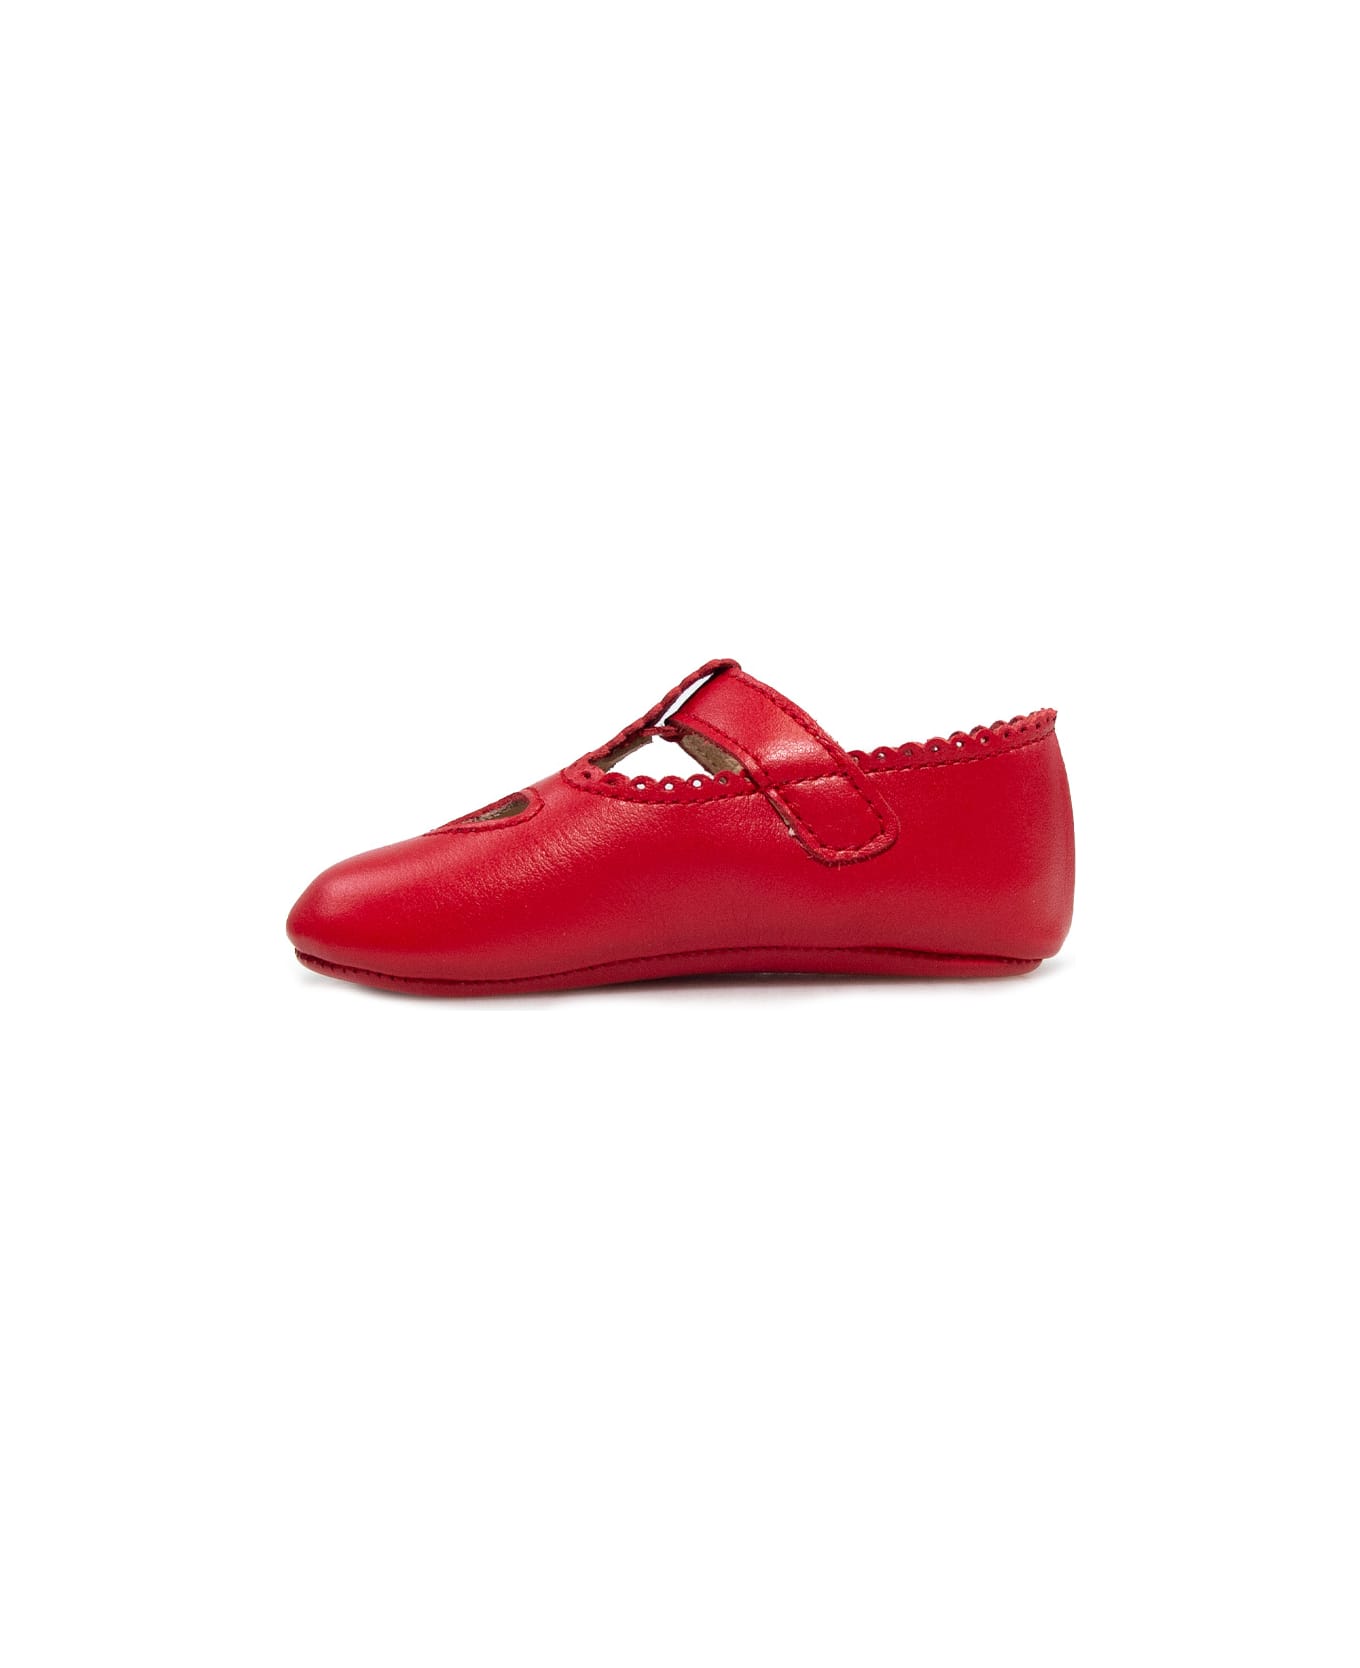 La stupenderia Leather Shoes - Red シューズ